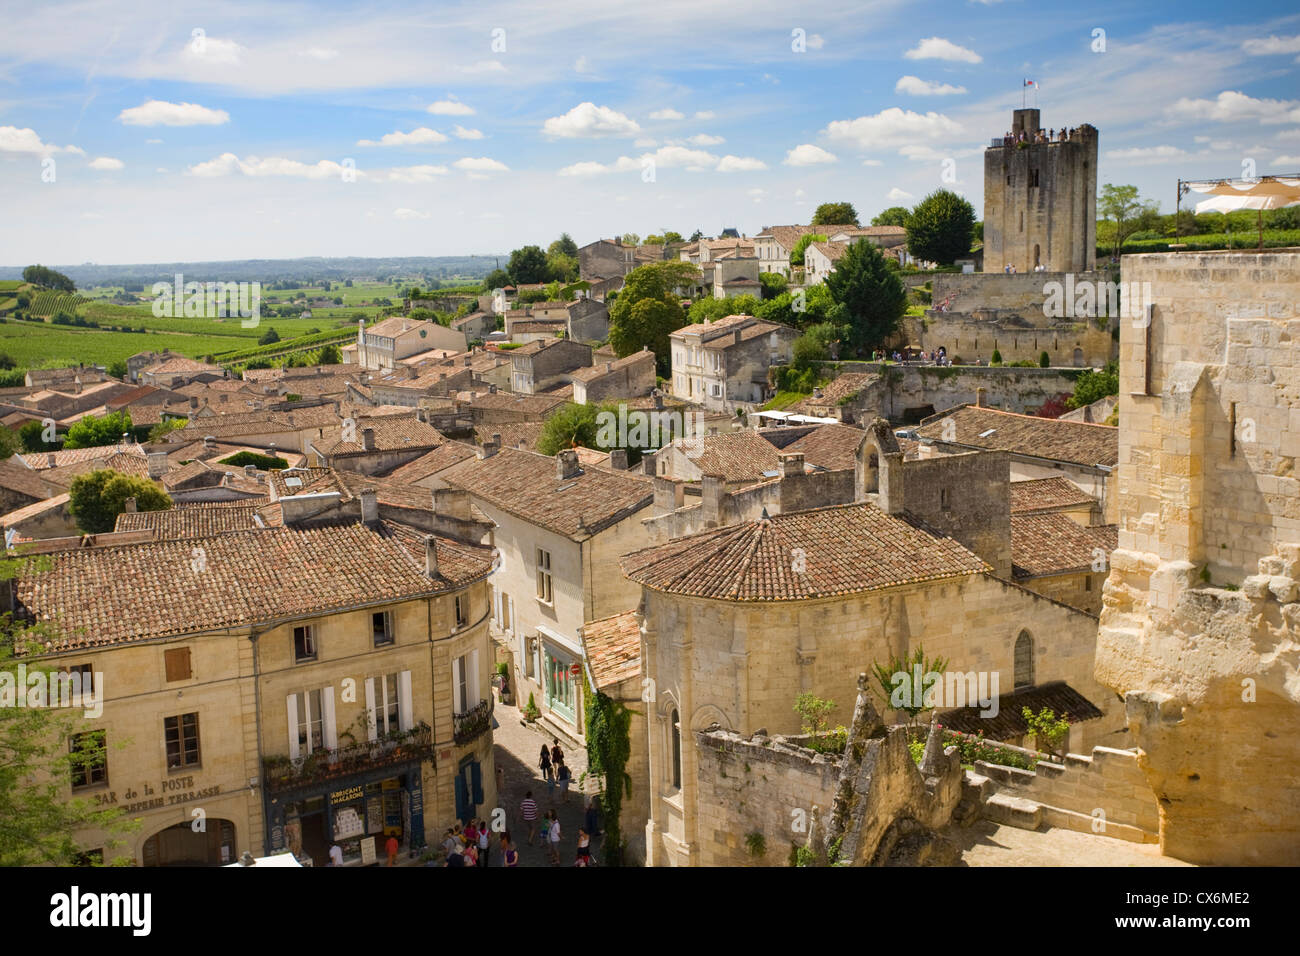 Town and La tour du Roy (King's tower), Saint-Emilion, Gironde, France Stock Photo